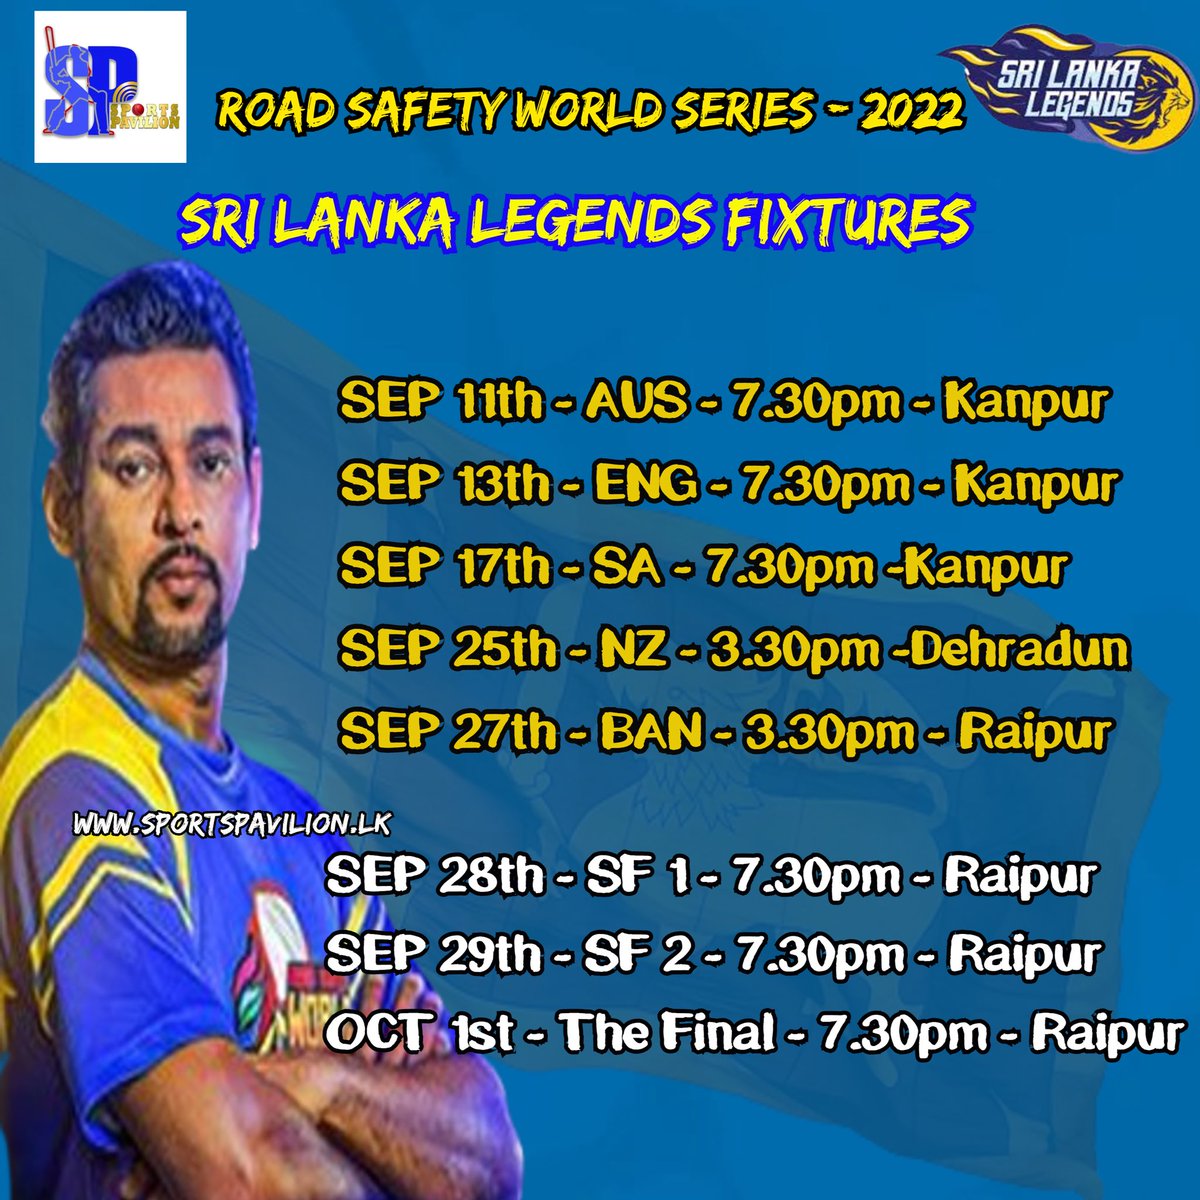 Sri Lanka Legends match Fixtures for Road Safety World Series Announced. 

#sportspavilionlk #RoadSafetyWorldSeries #SriLankaLegends